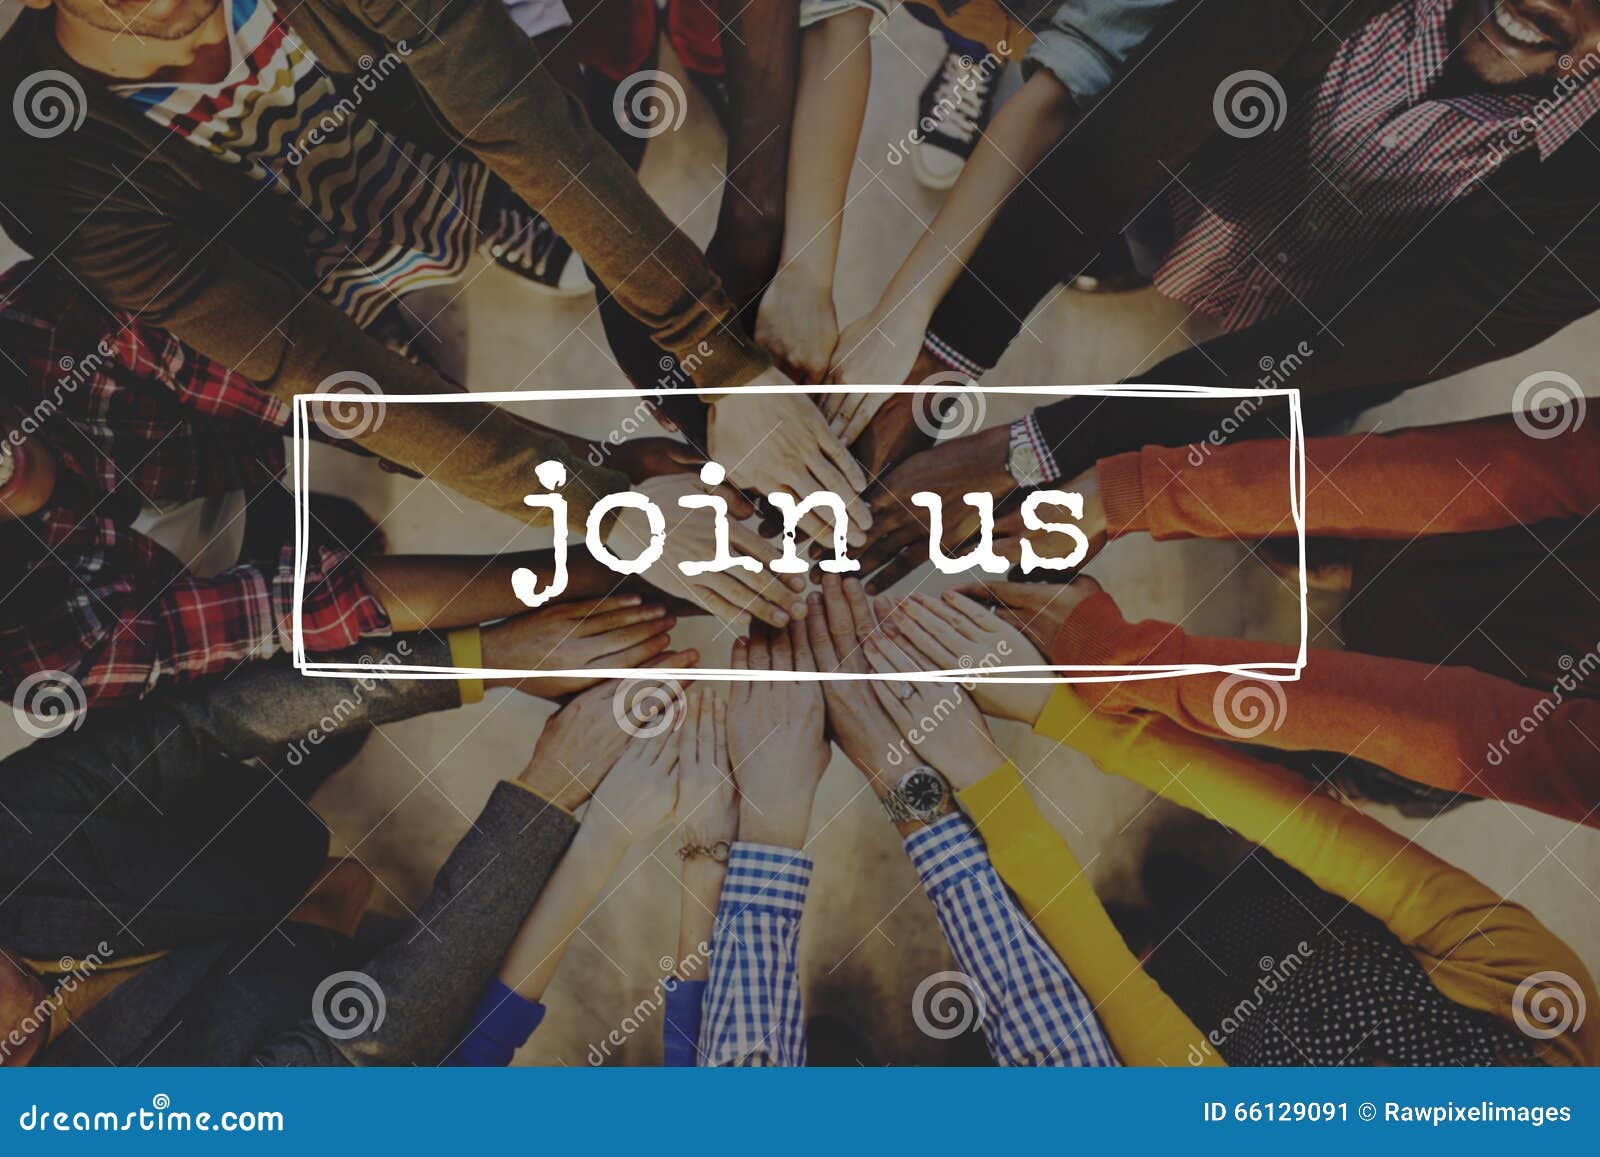 join us team recruitment register membership hiring concept